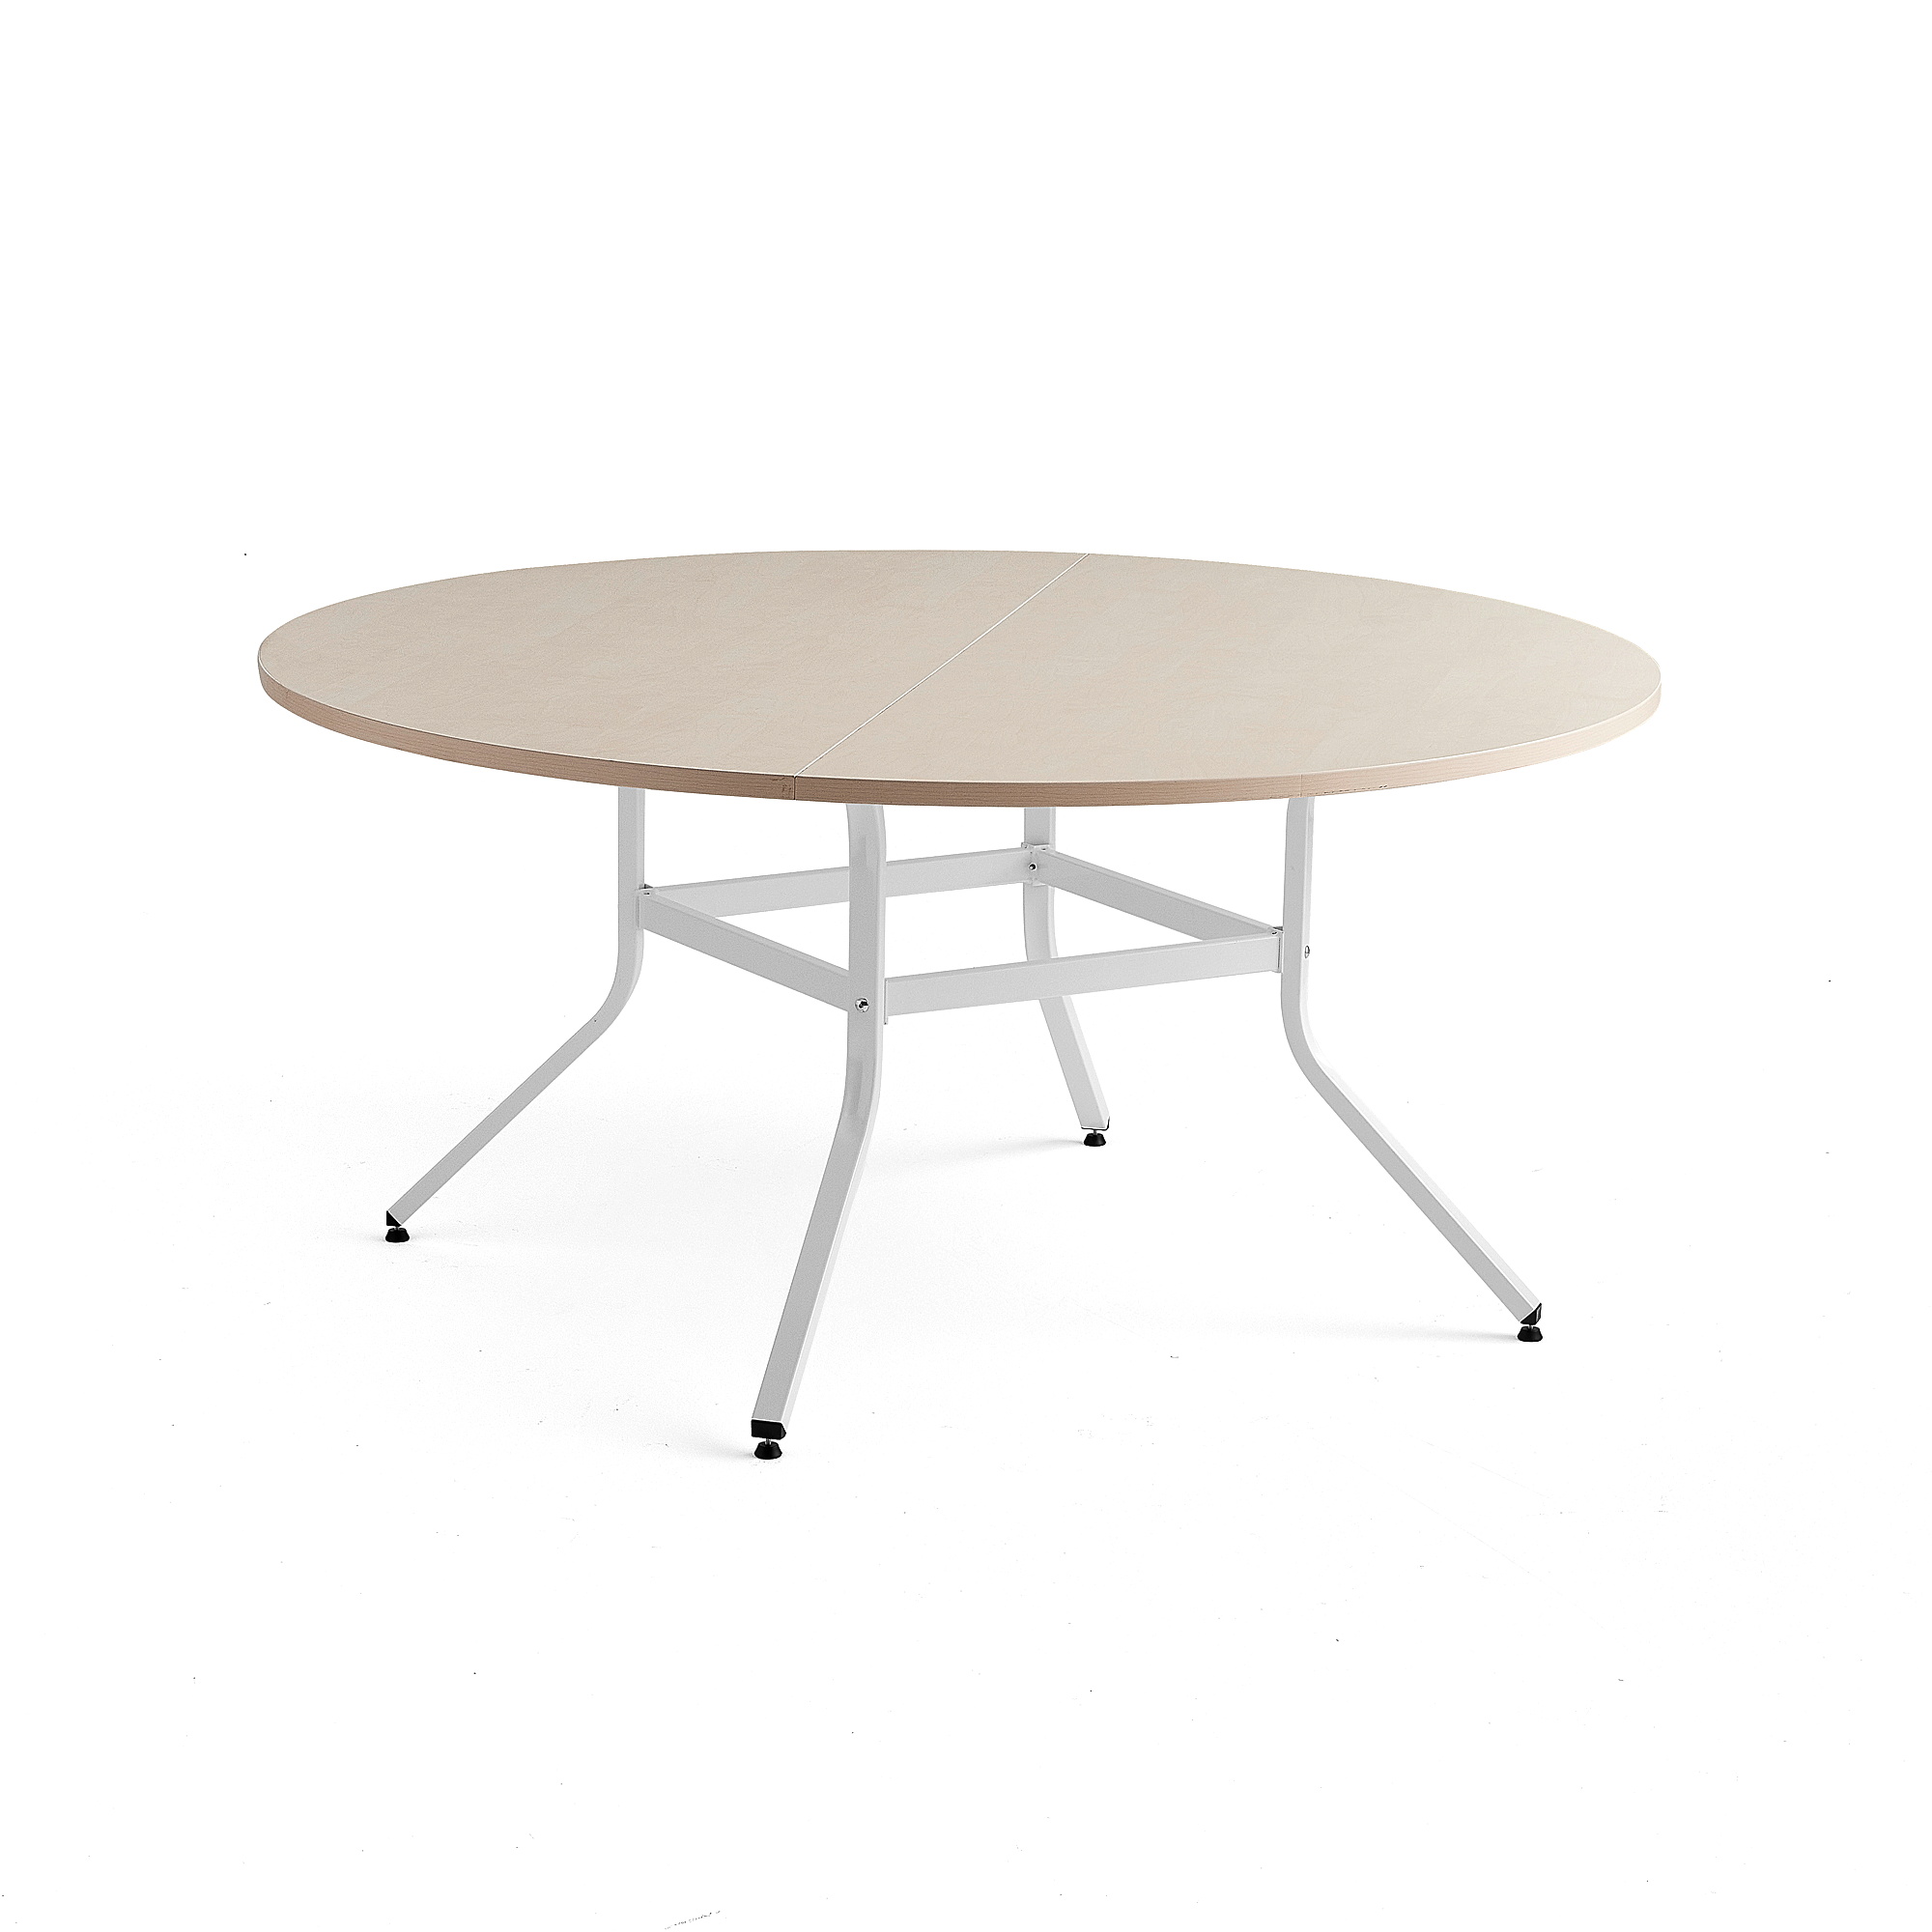 Stůl VARIOUS, Ø1600 mm, výška 740 mm, bílá, bříza